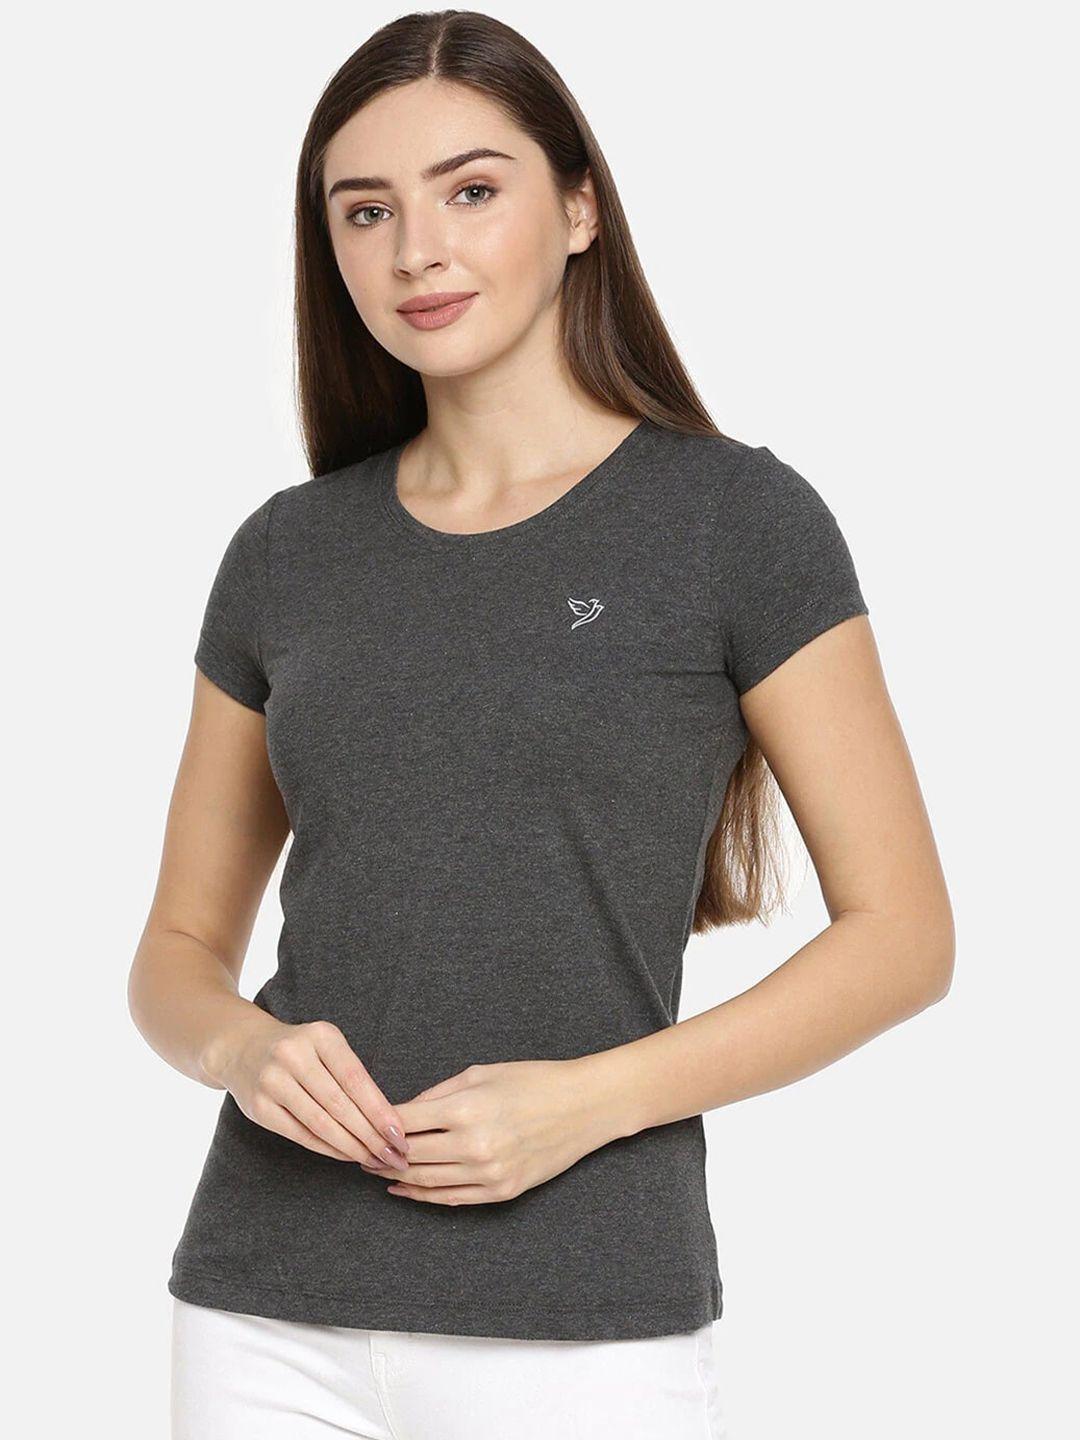 twin birds women slim fit cotton t-shirt